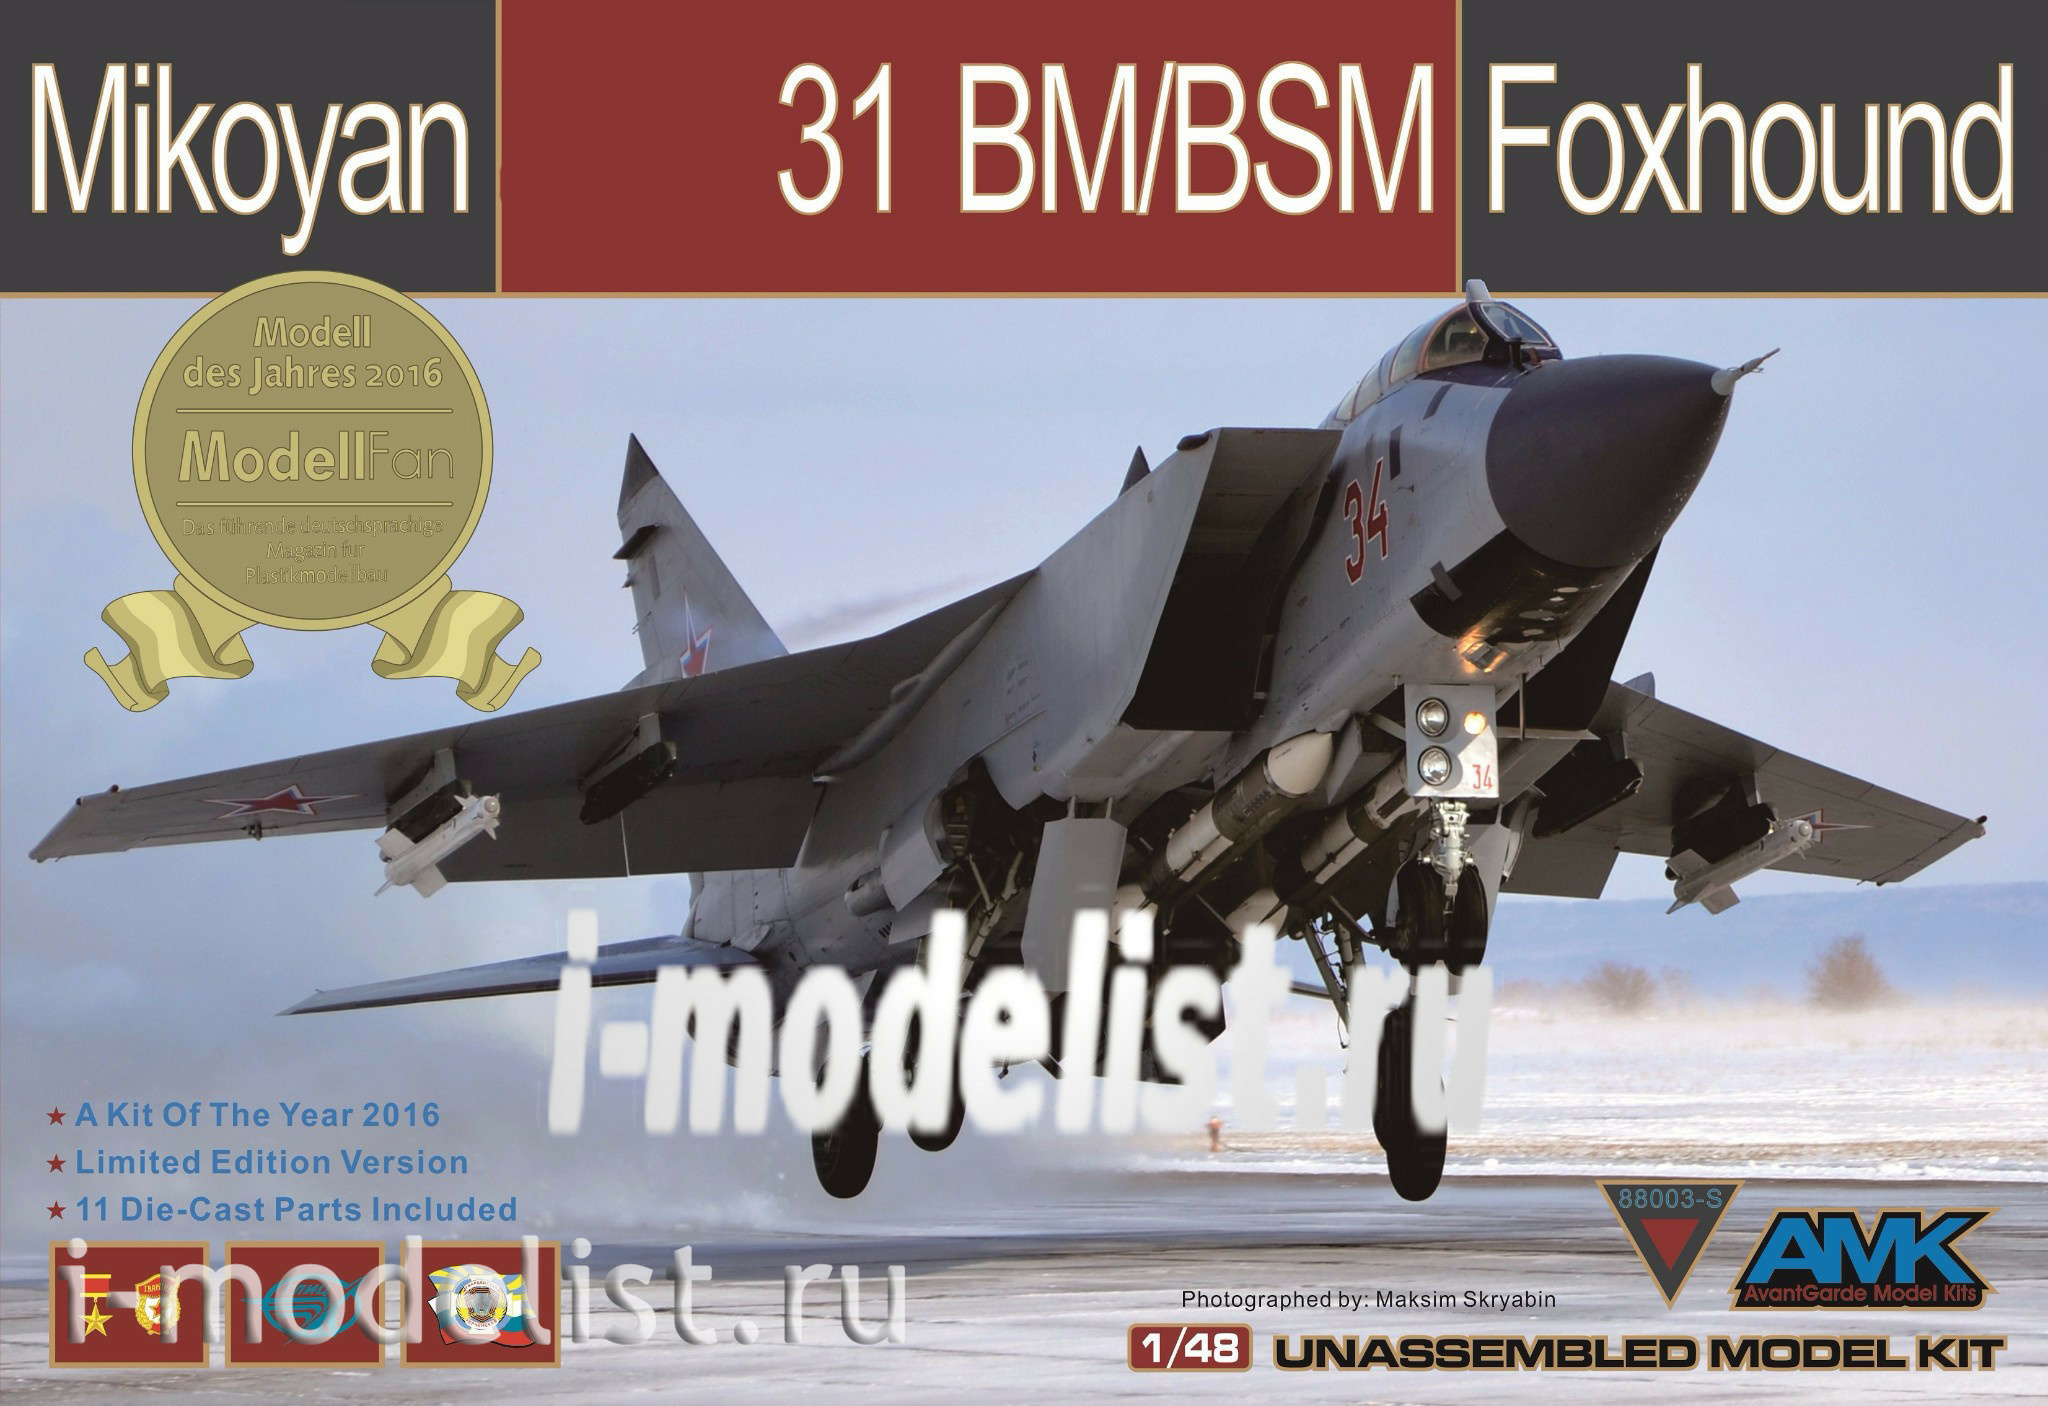 88003-S AMK 1/48 Самолёт Mikoyan - 31BM/BSM Foxhound Limited Edition 